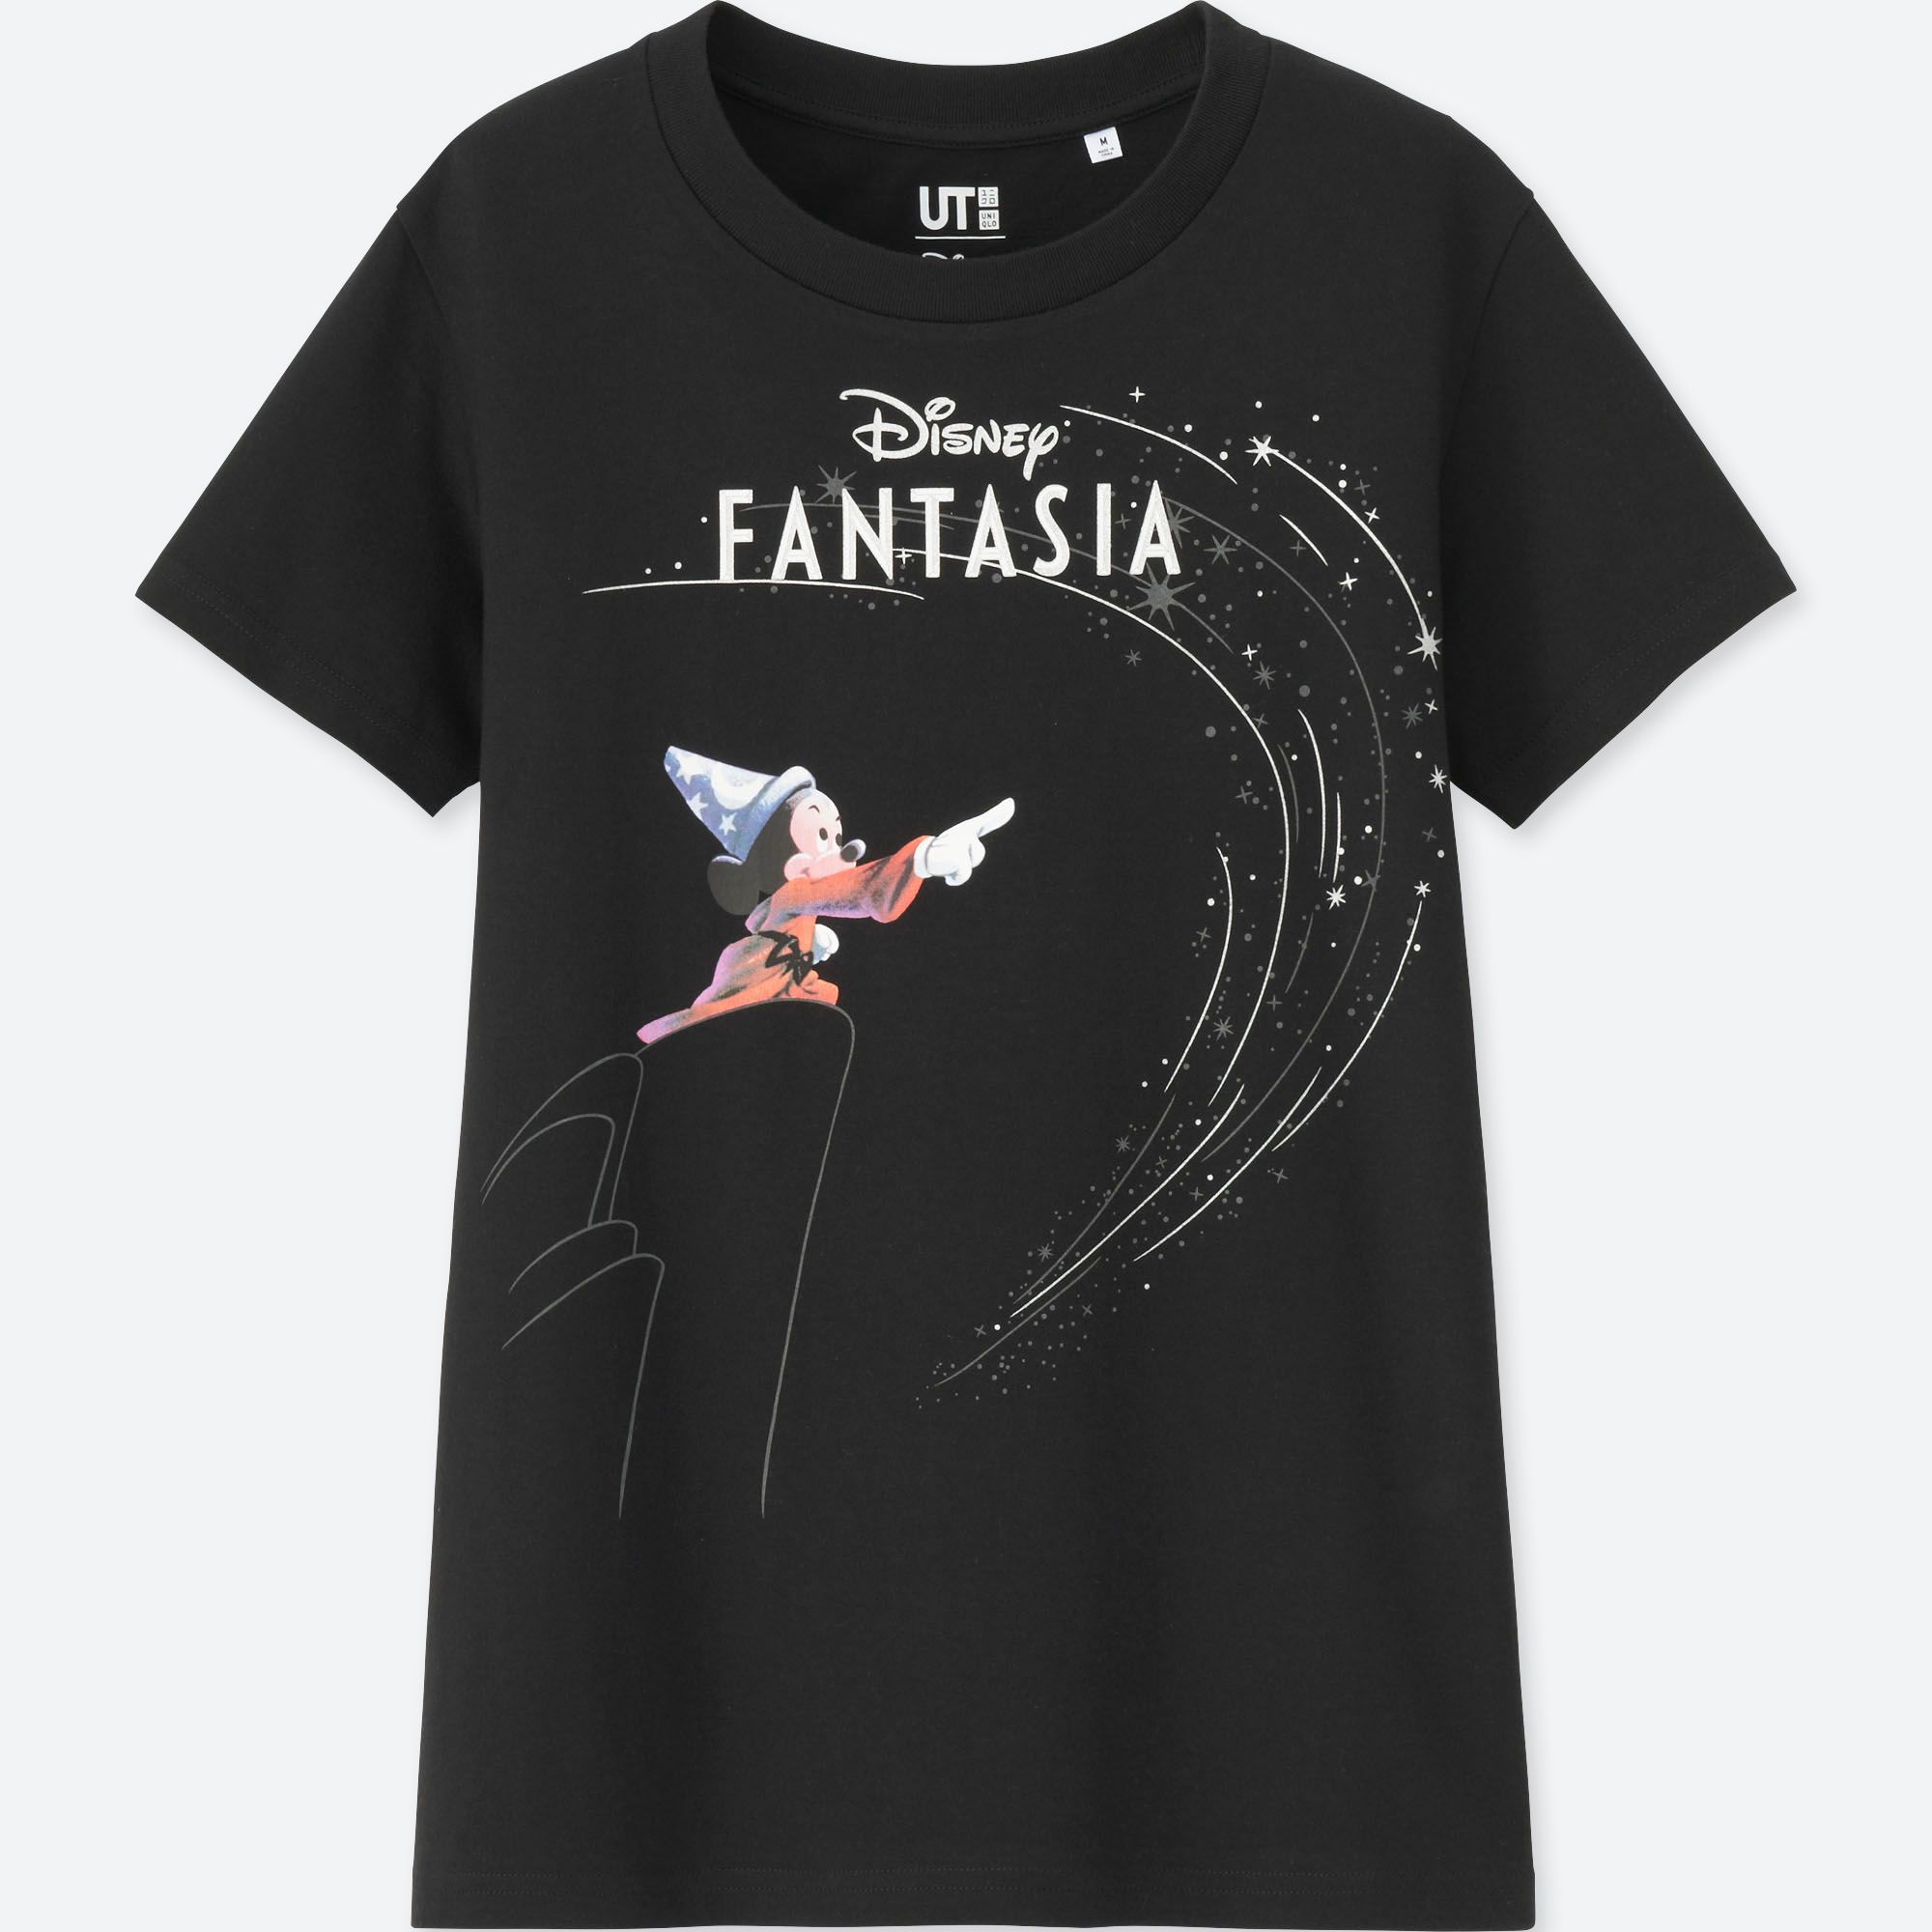 Uniqlo's Fantasia Collection Brings Some Disney Magic to Your Wardrobe